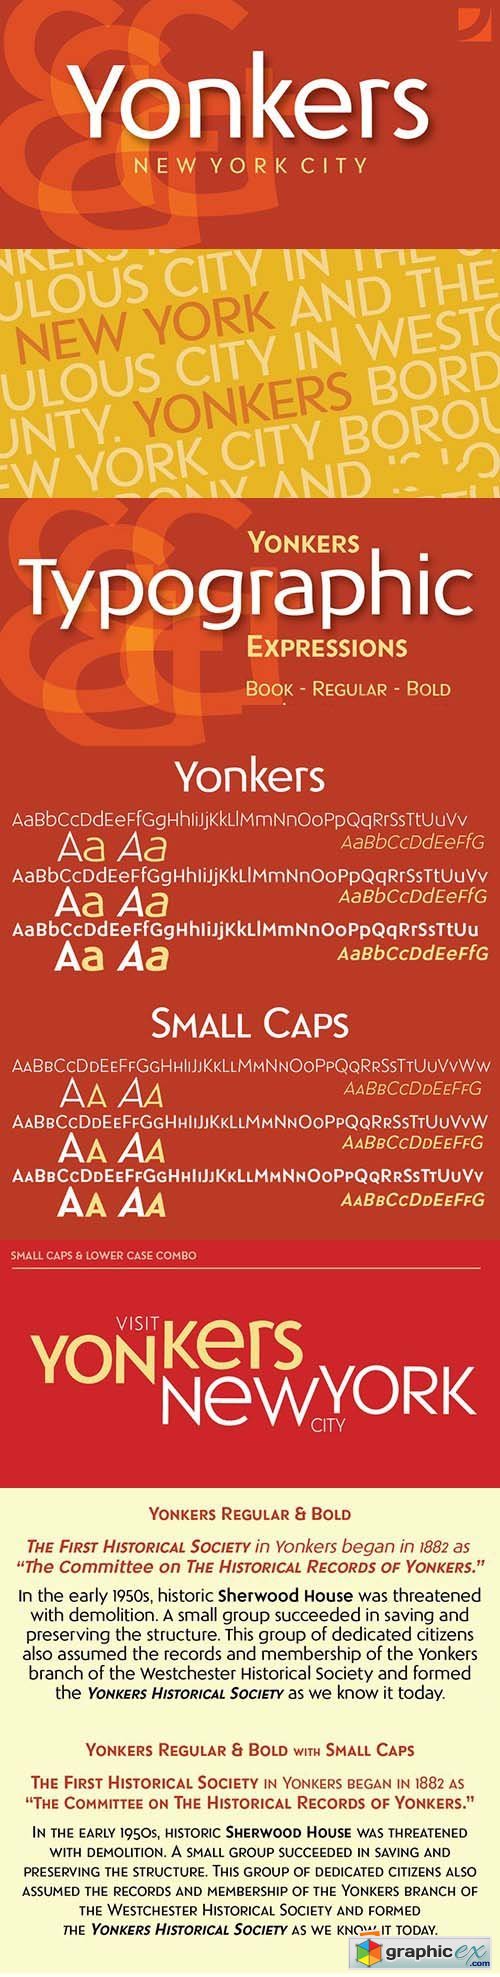 Yonker Font Family - 6 Font $230